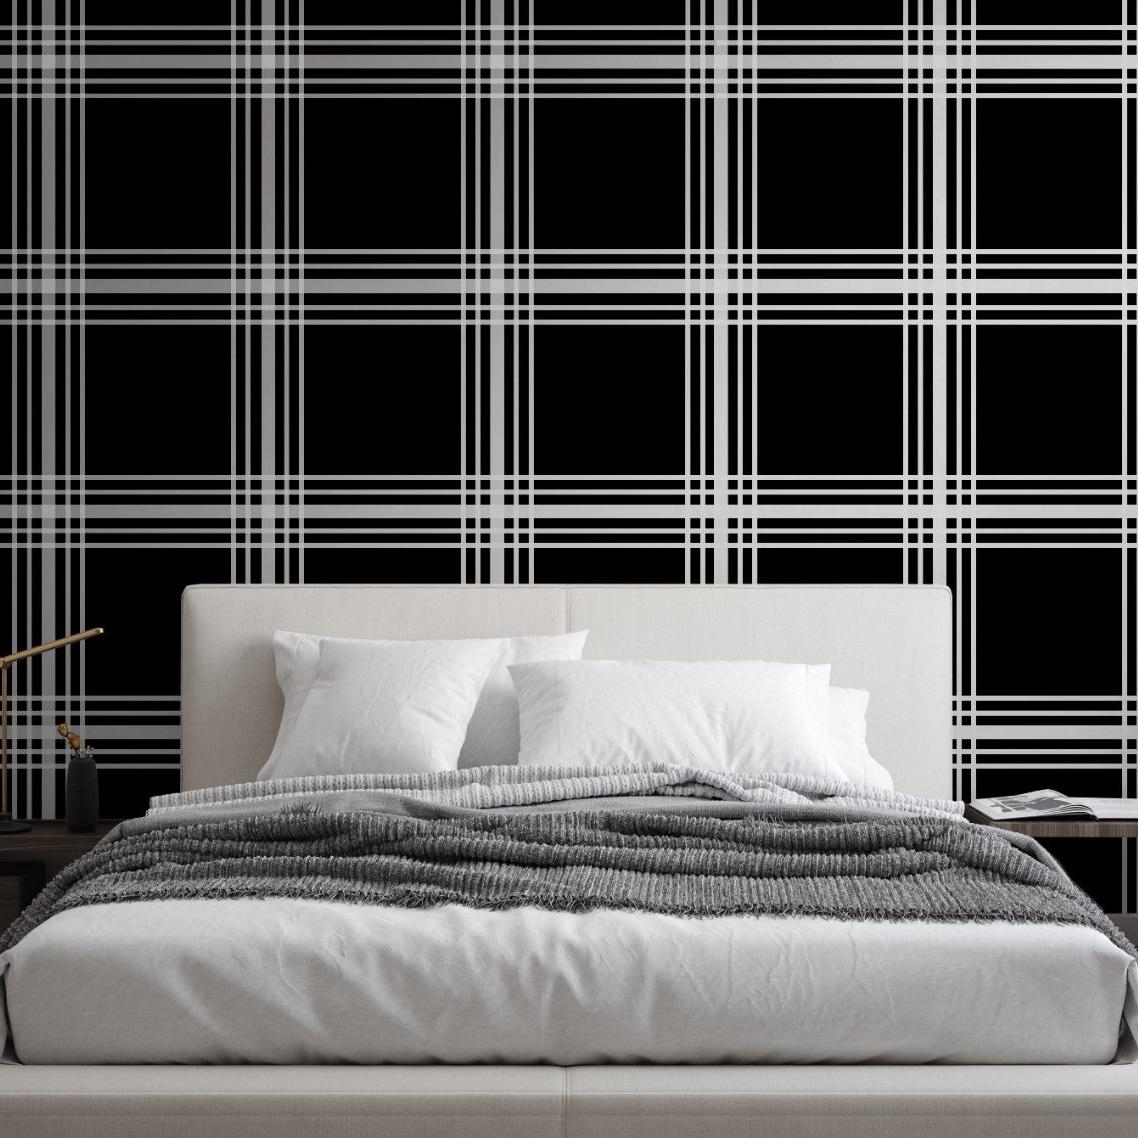 Davenport Wallpaper from The Chelsea DeBoer Line featured in modern bedroom setting.
